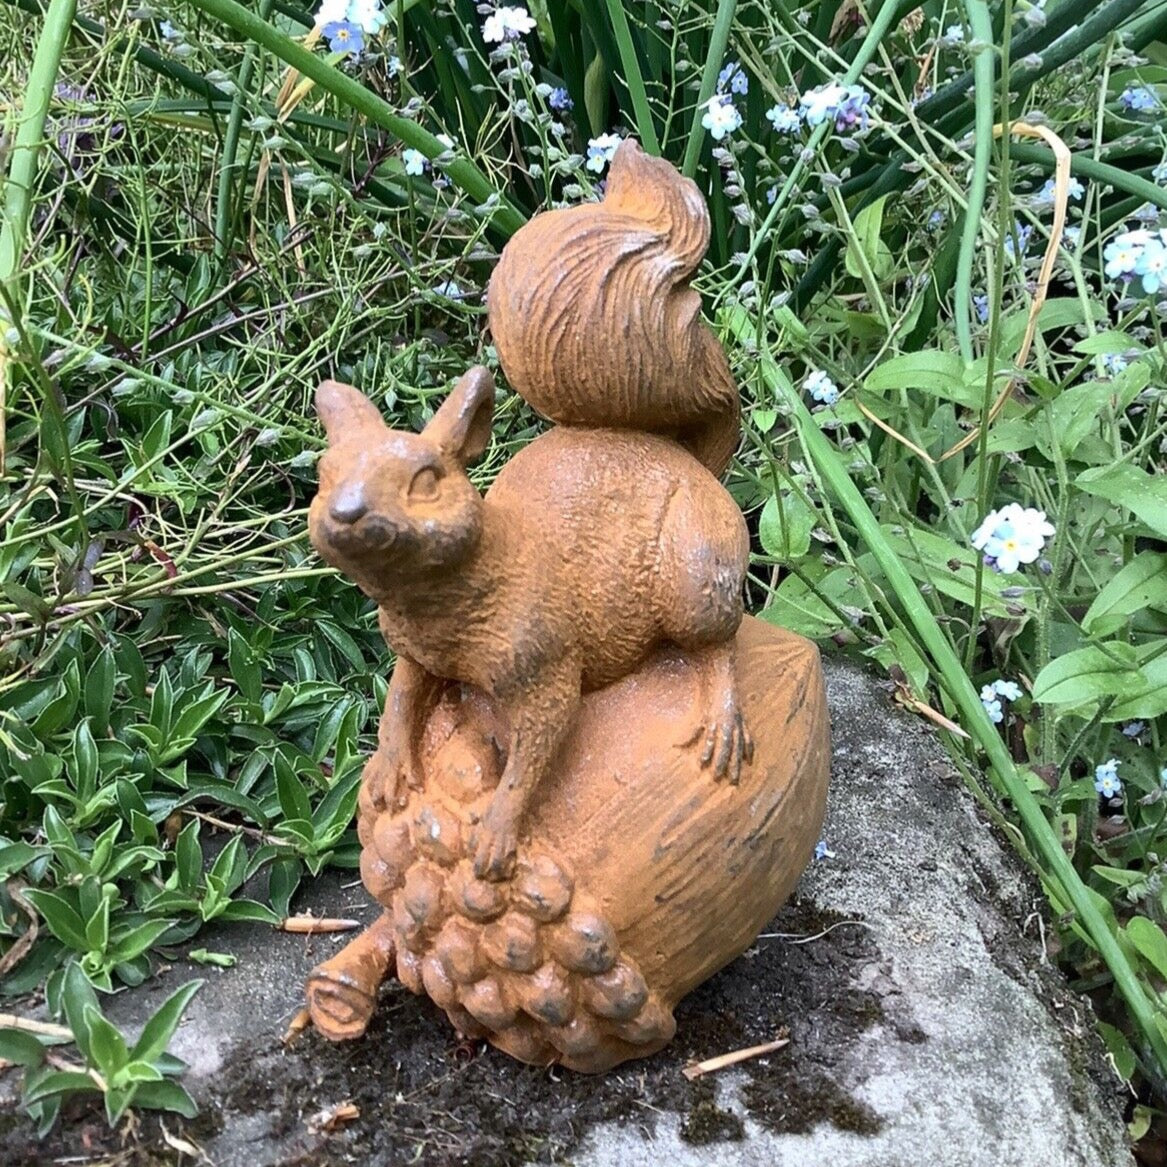 Wholesale Cast Iron Squirrel with Acorn Decorative Double Metal